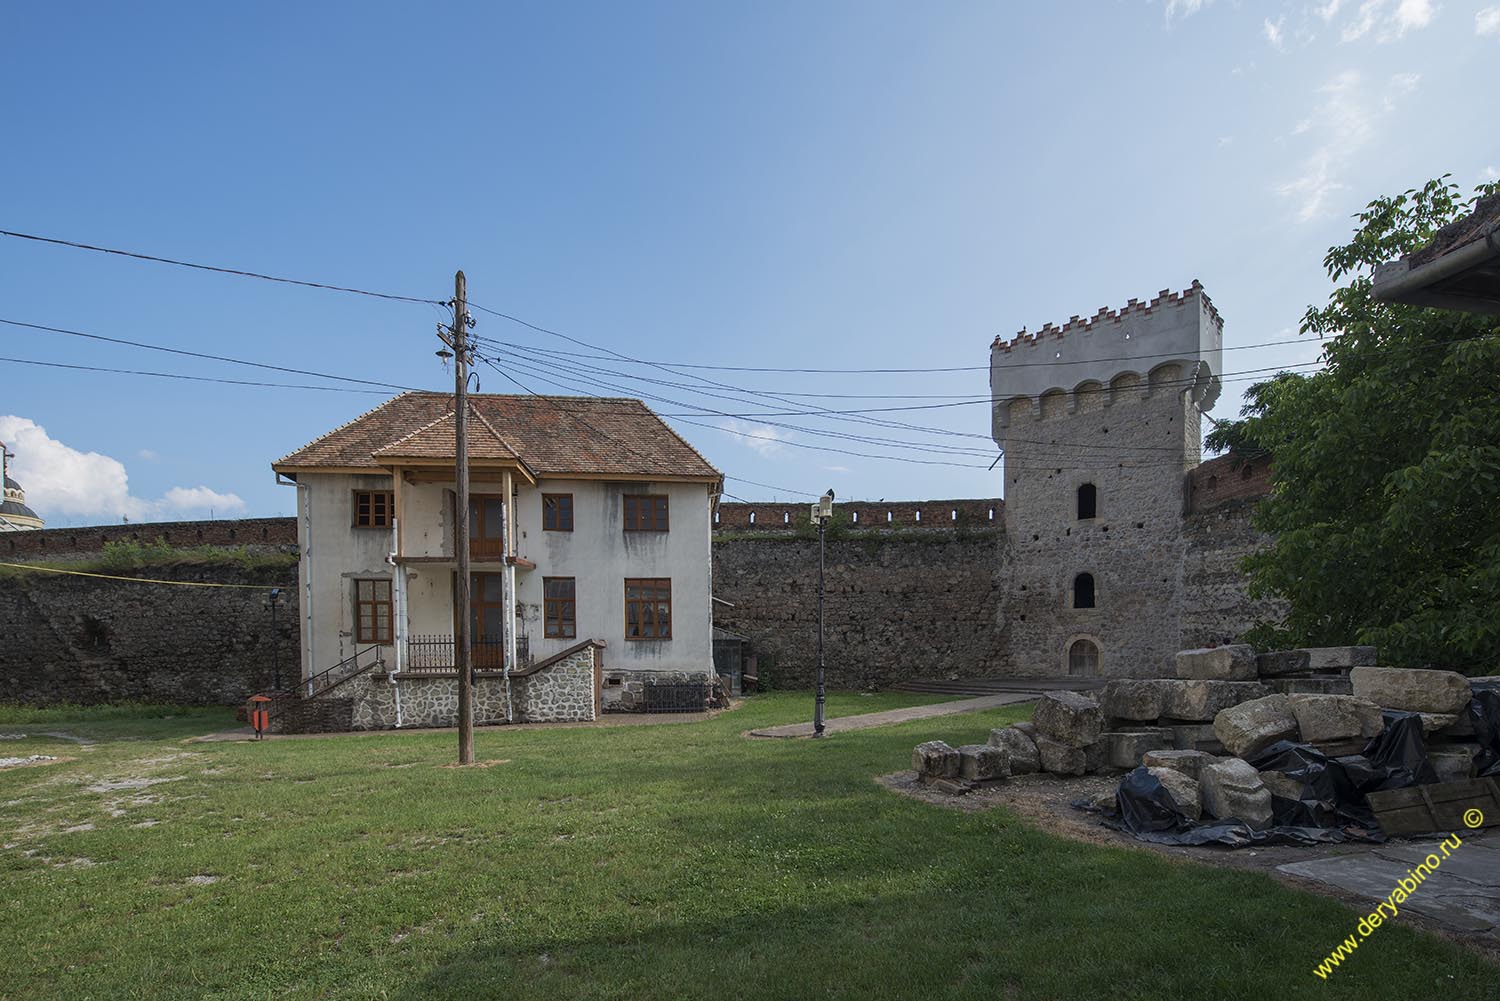    Fortress Aiud Romania